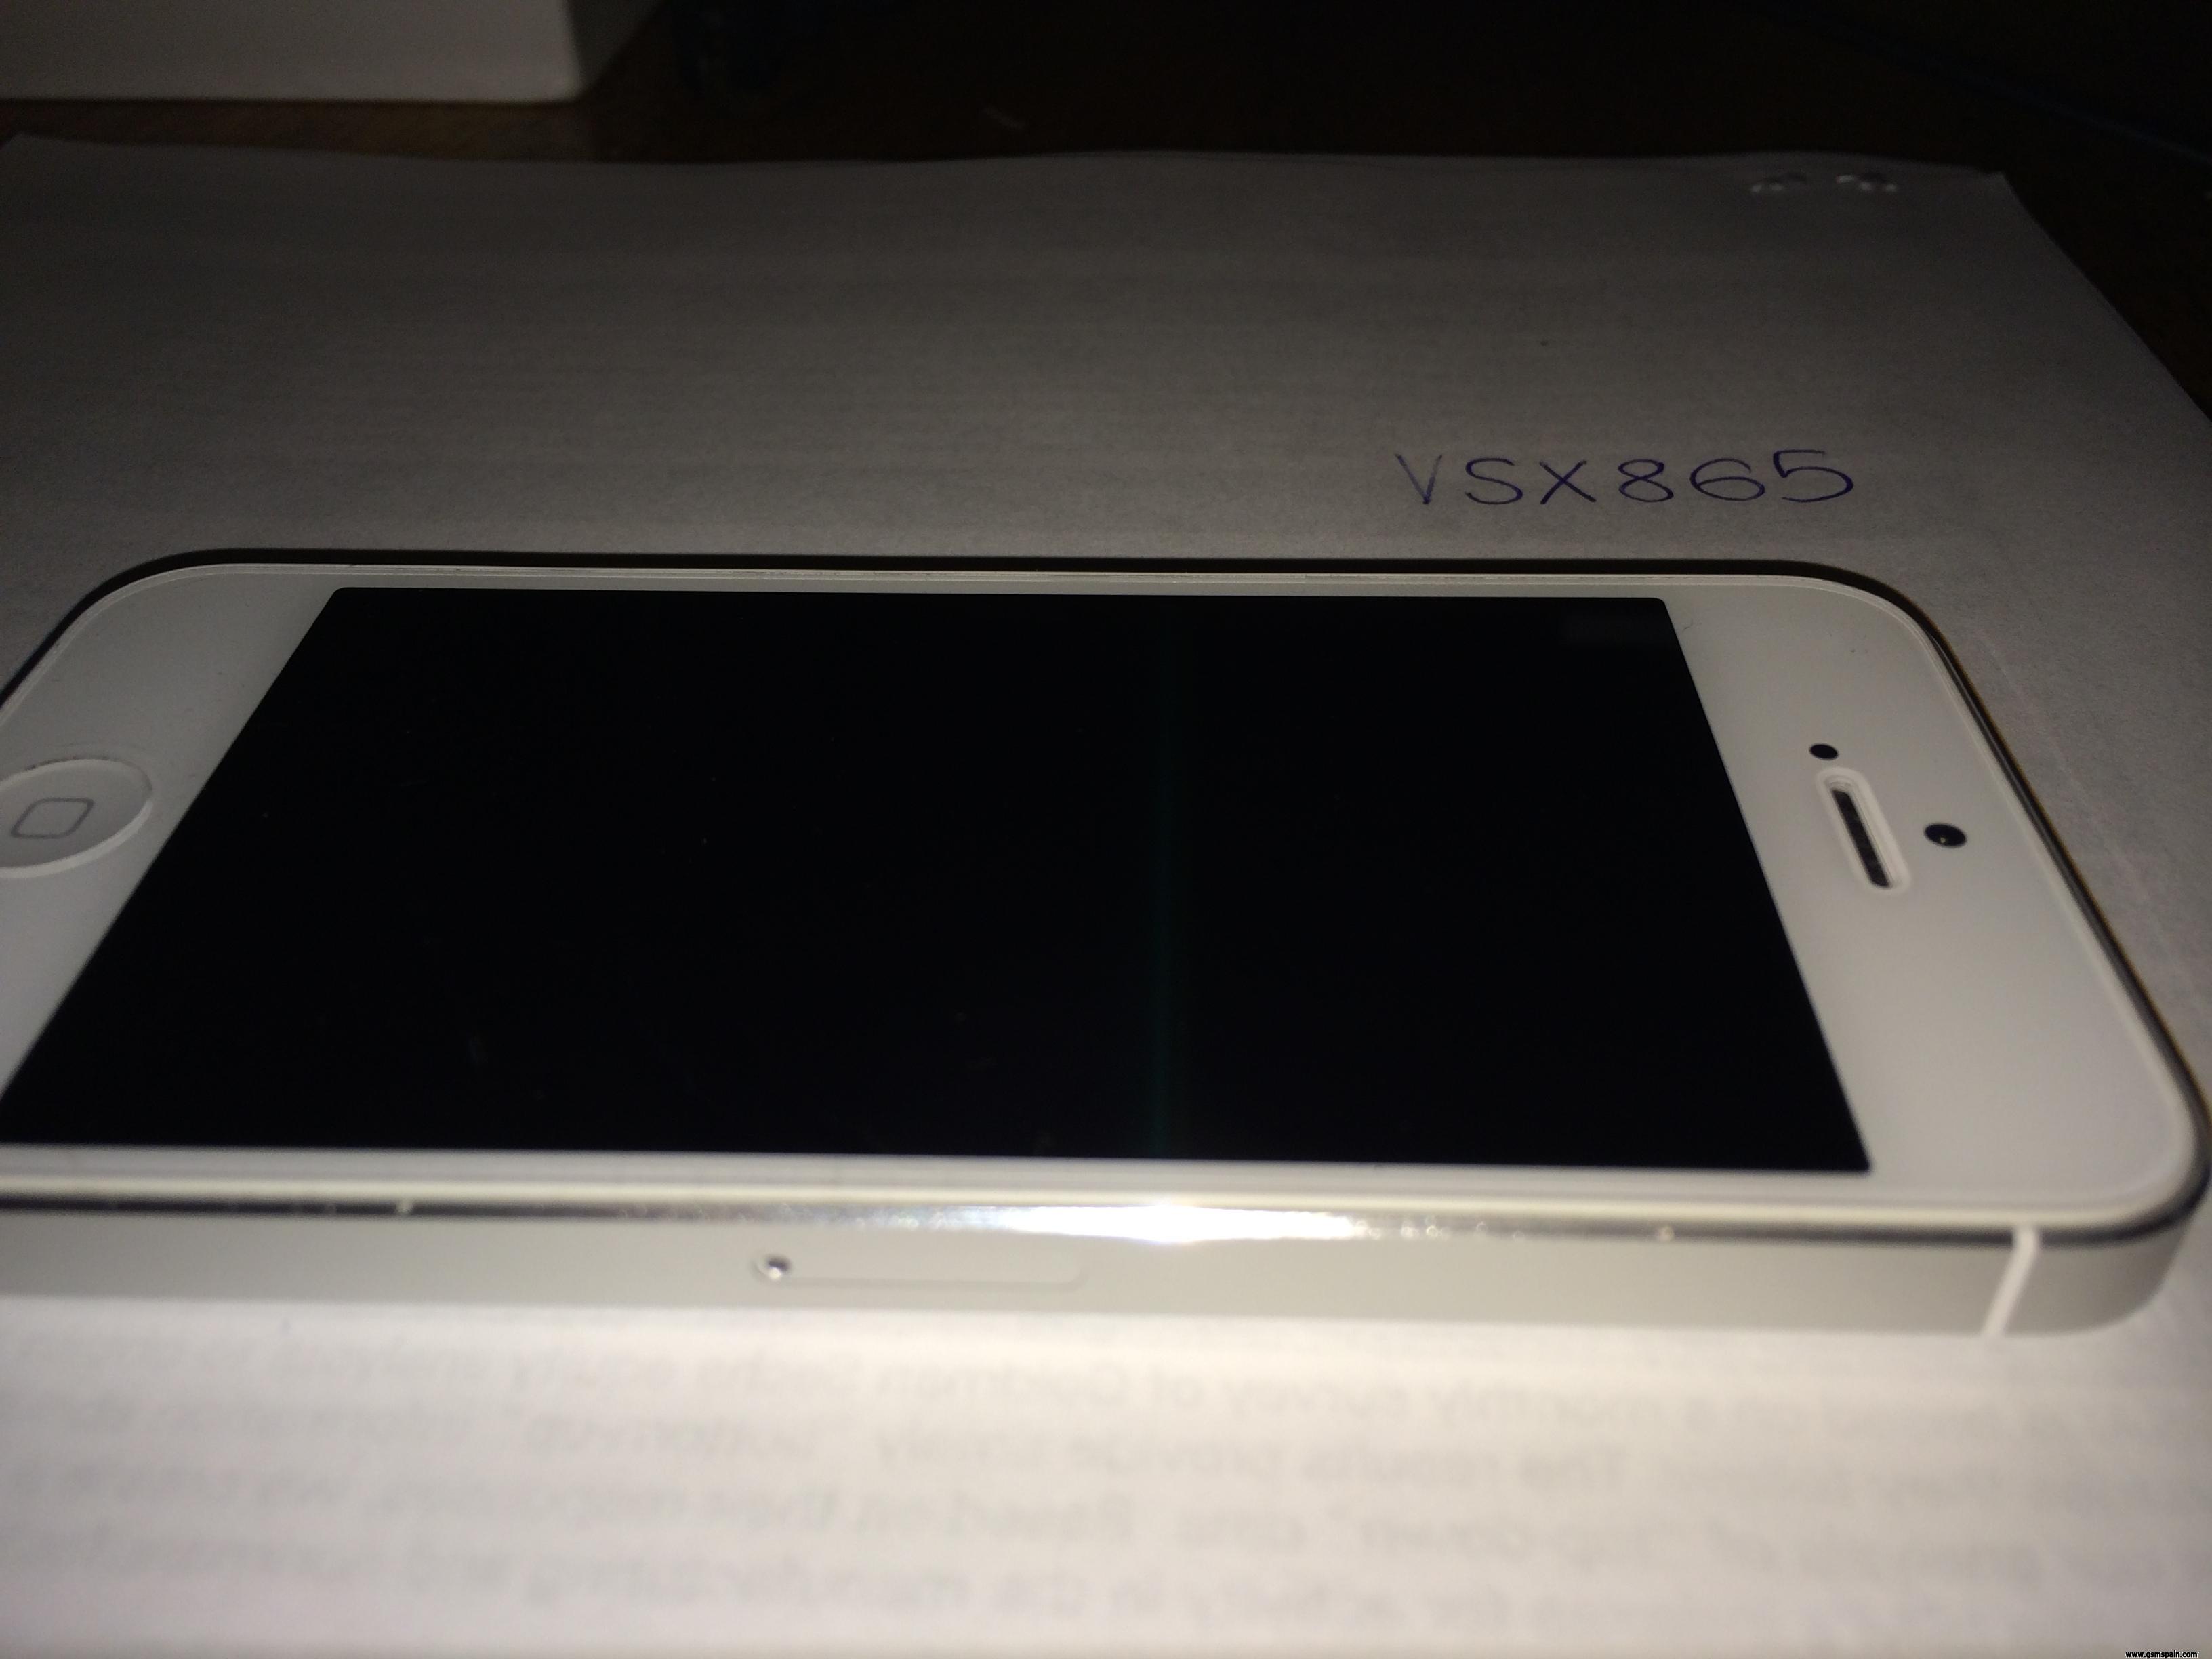 [VENDO] iPhone 5 32Gb Blanco Libre con Applecare hasta Junio 2015